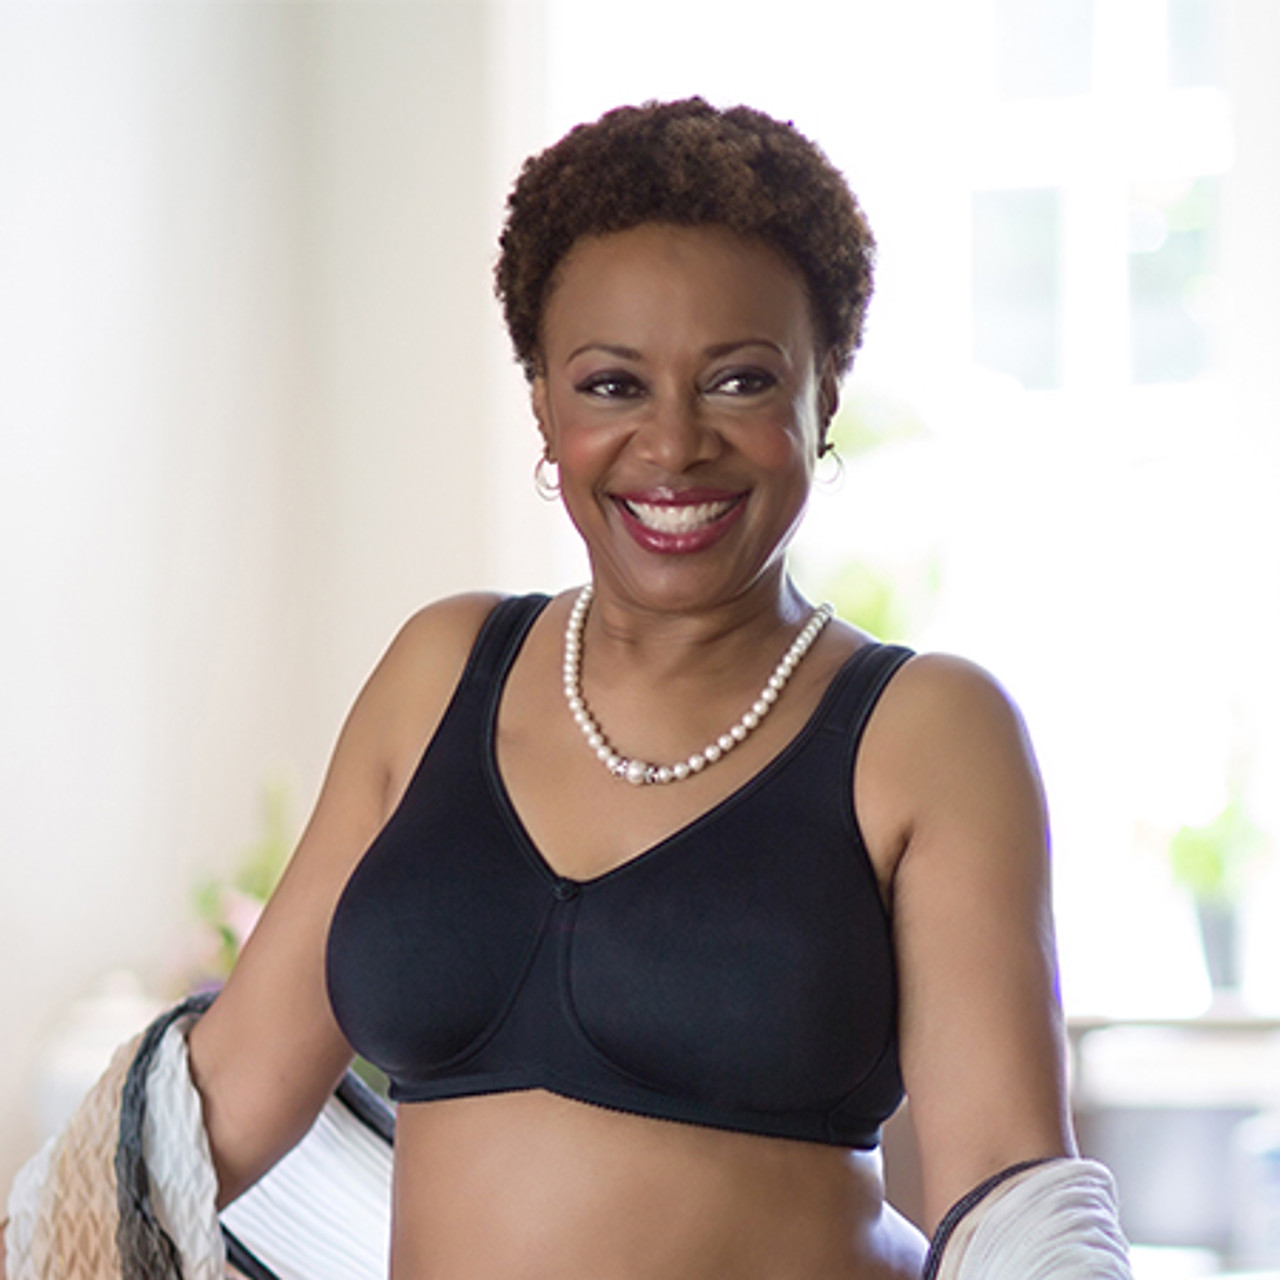 American Breast Care Soft Shape Mastectomy Bra - Full Figure